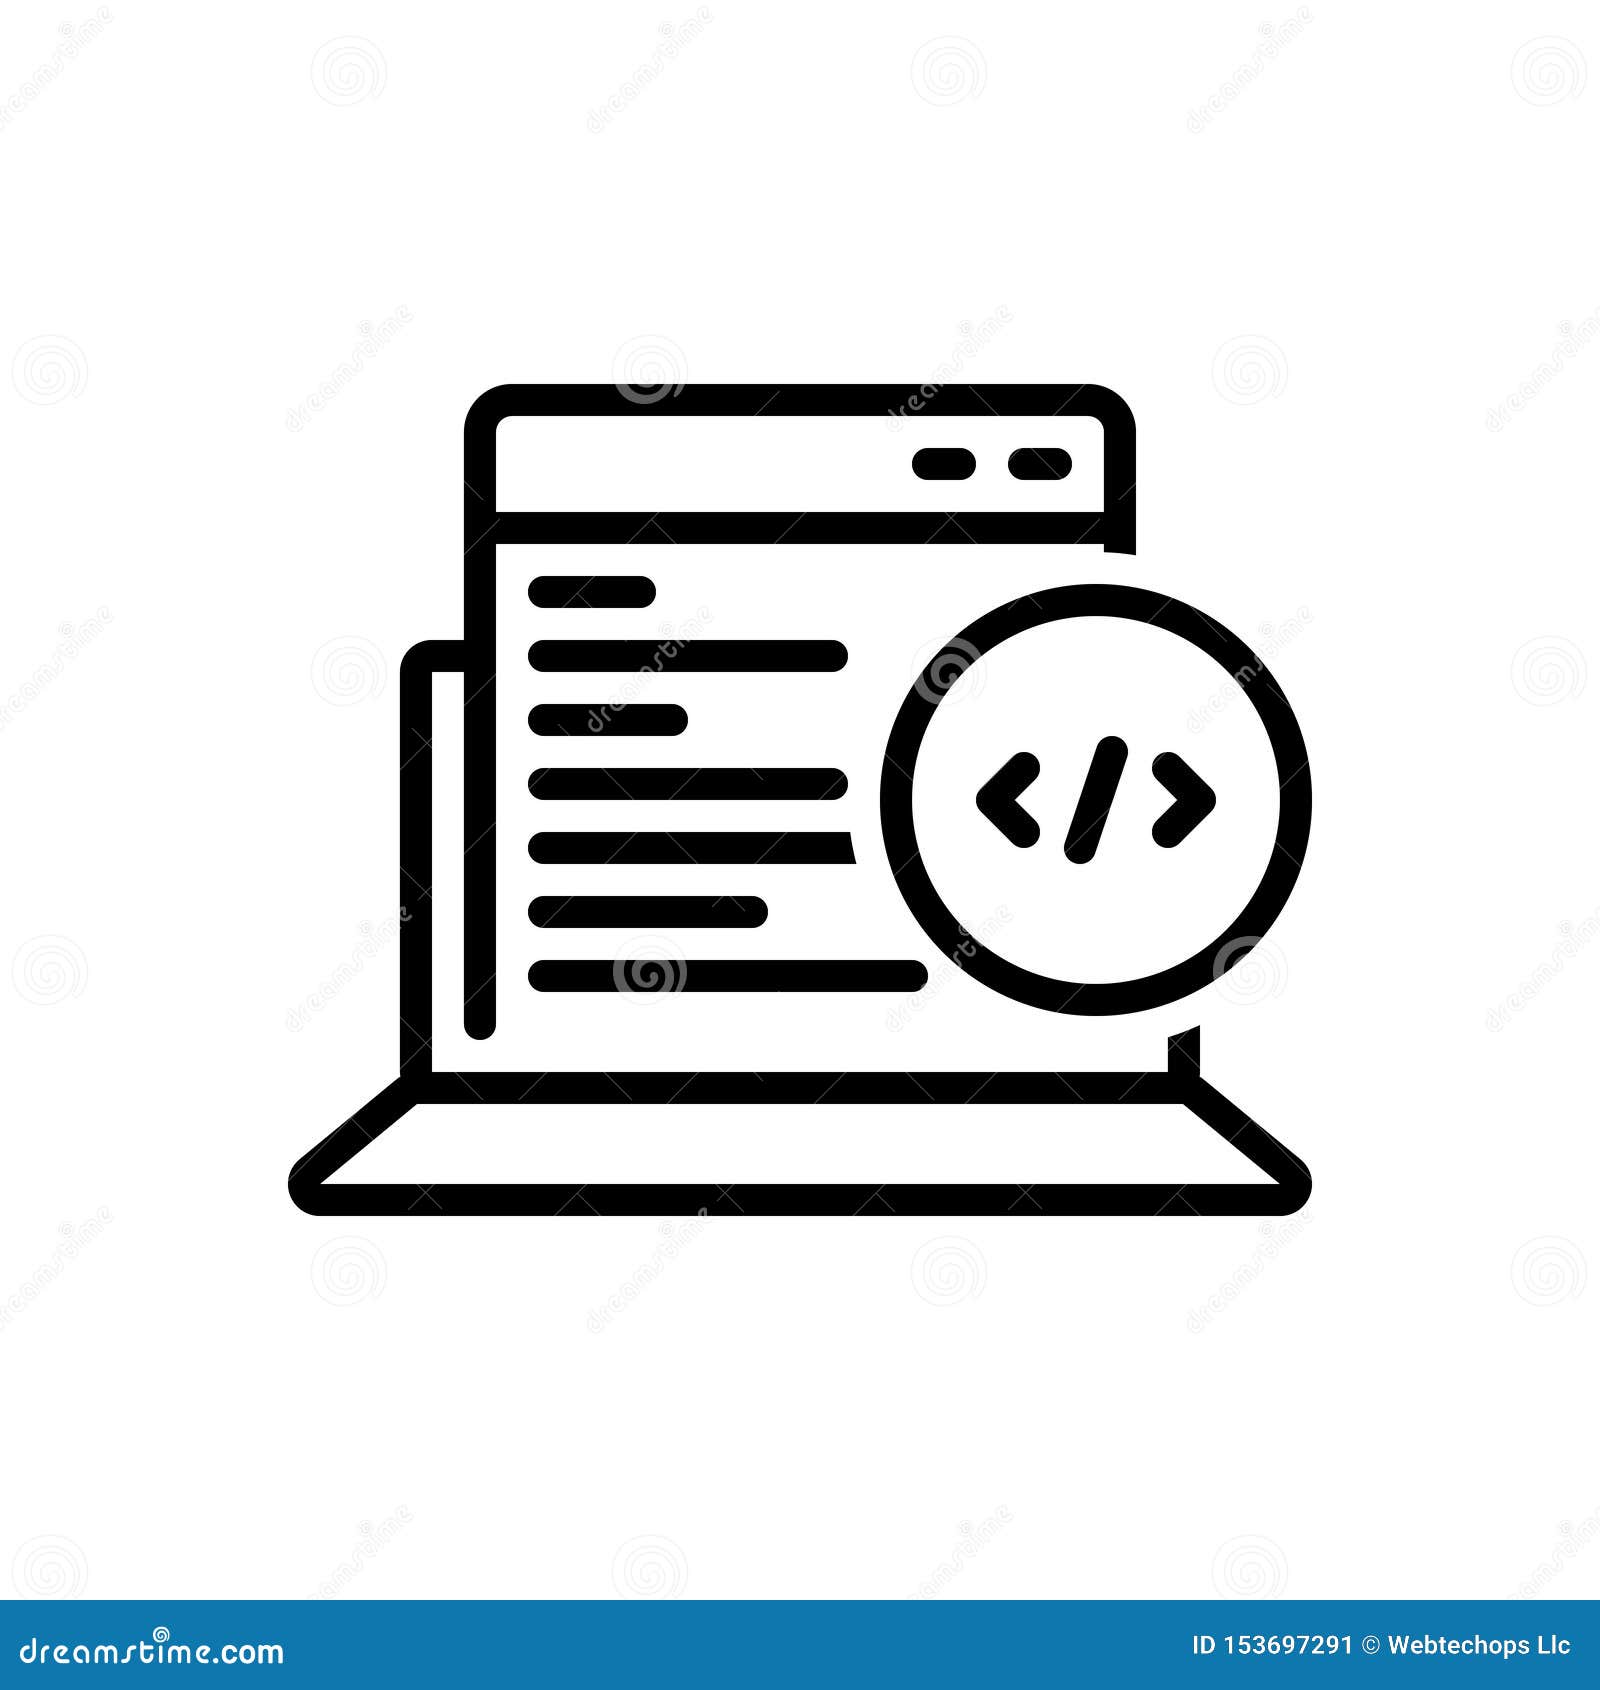 black line icon for web coding, summarize and arrange